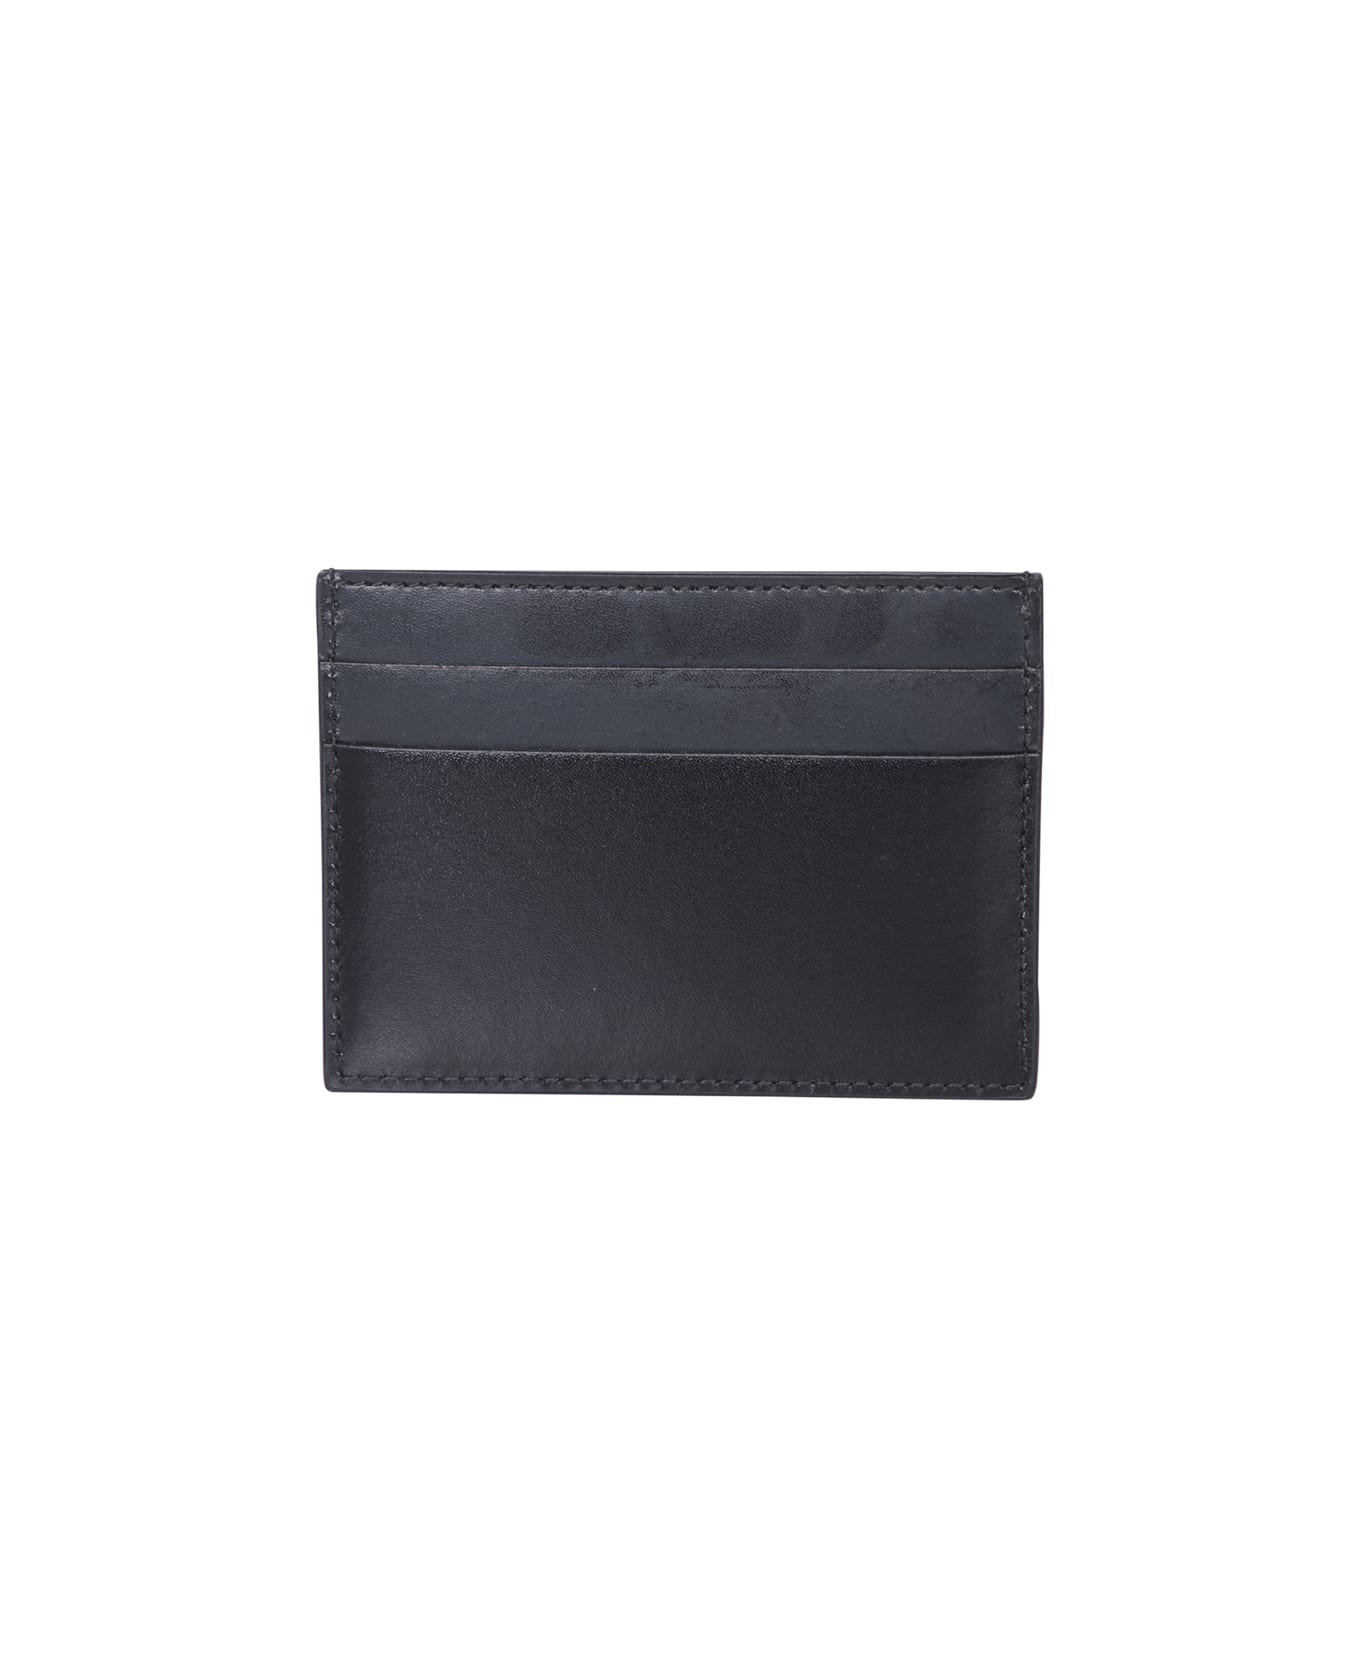 Balenciaga Logo Printed Cardholder - Black 財布